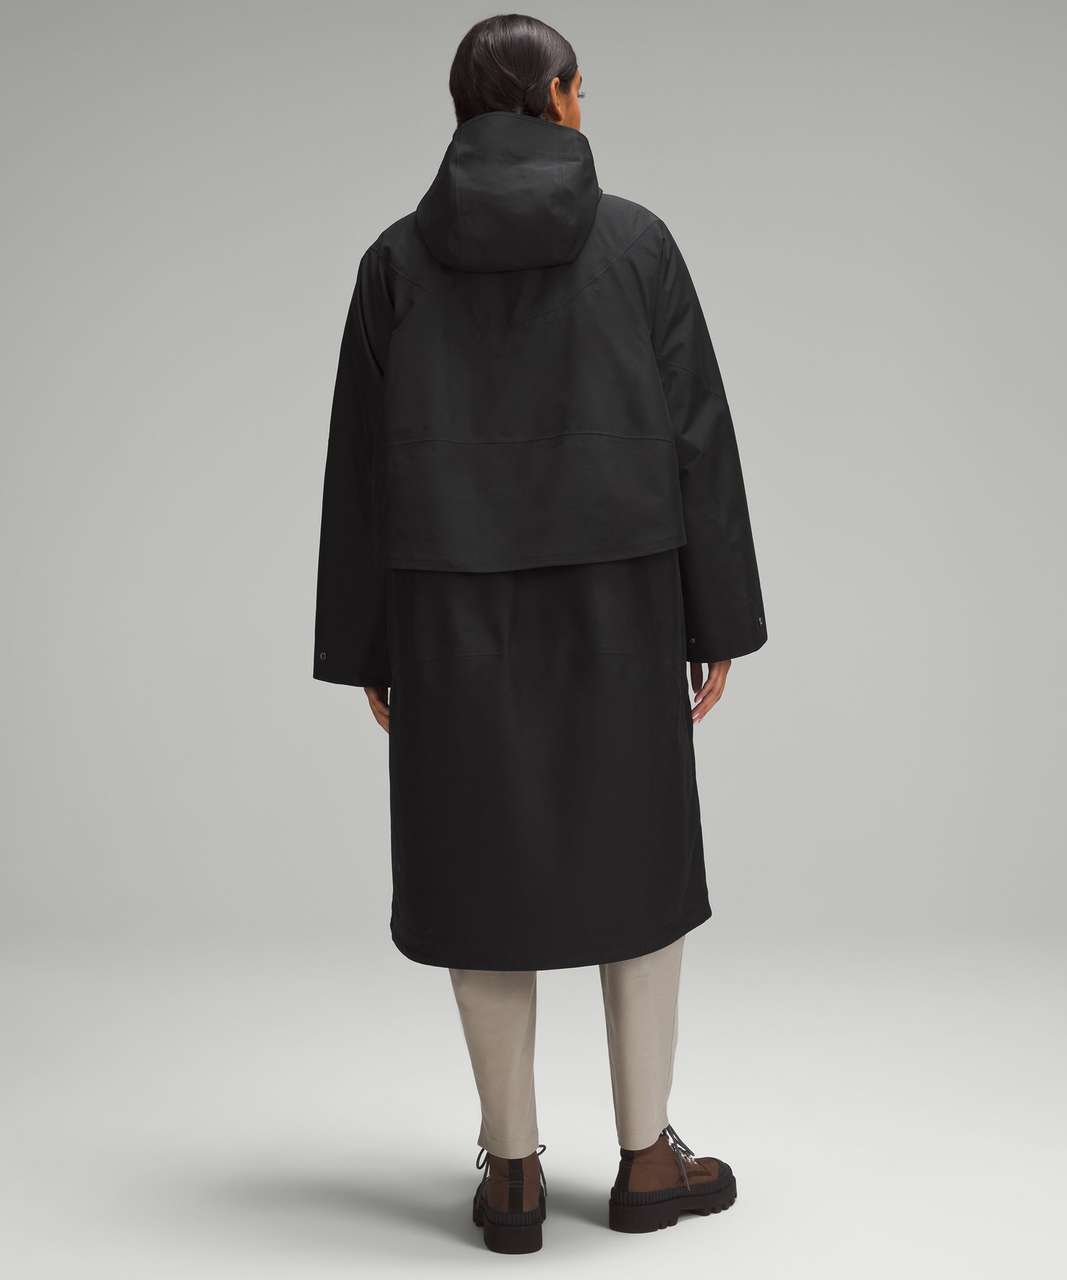 Lululemon 3-in-1 Insulated Rain Coat - Black